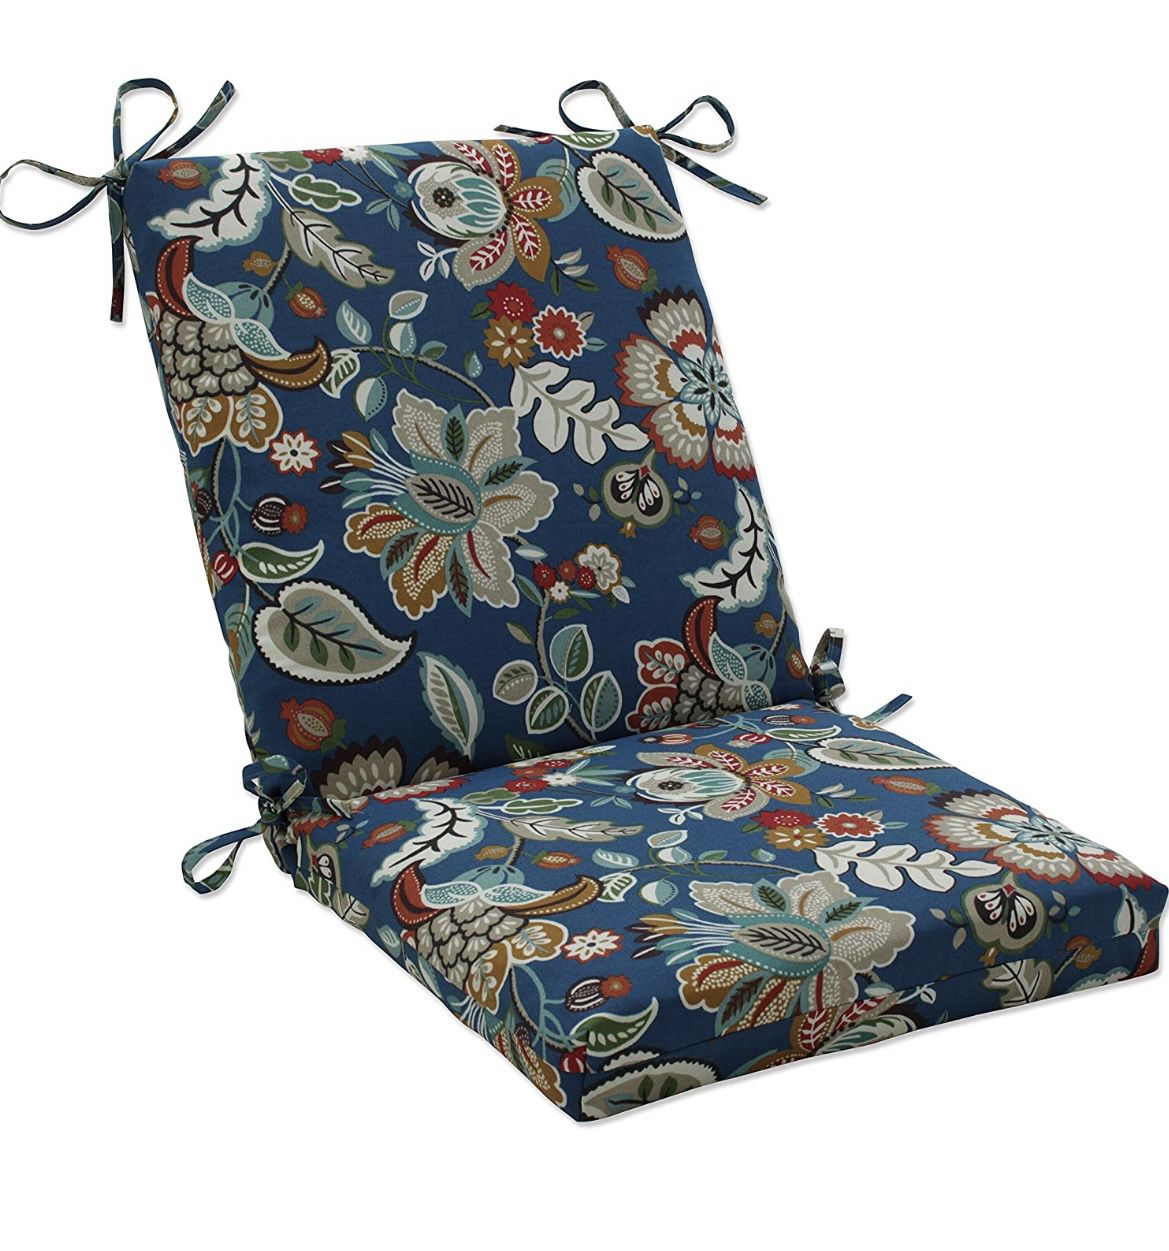 Pillow Perfect Outdoor/Indoor Telfair Peacock Chair Cushion, Blue